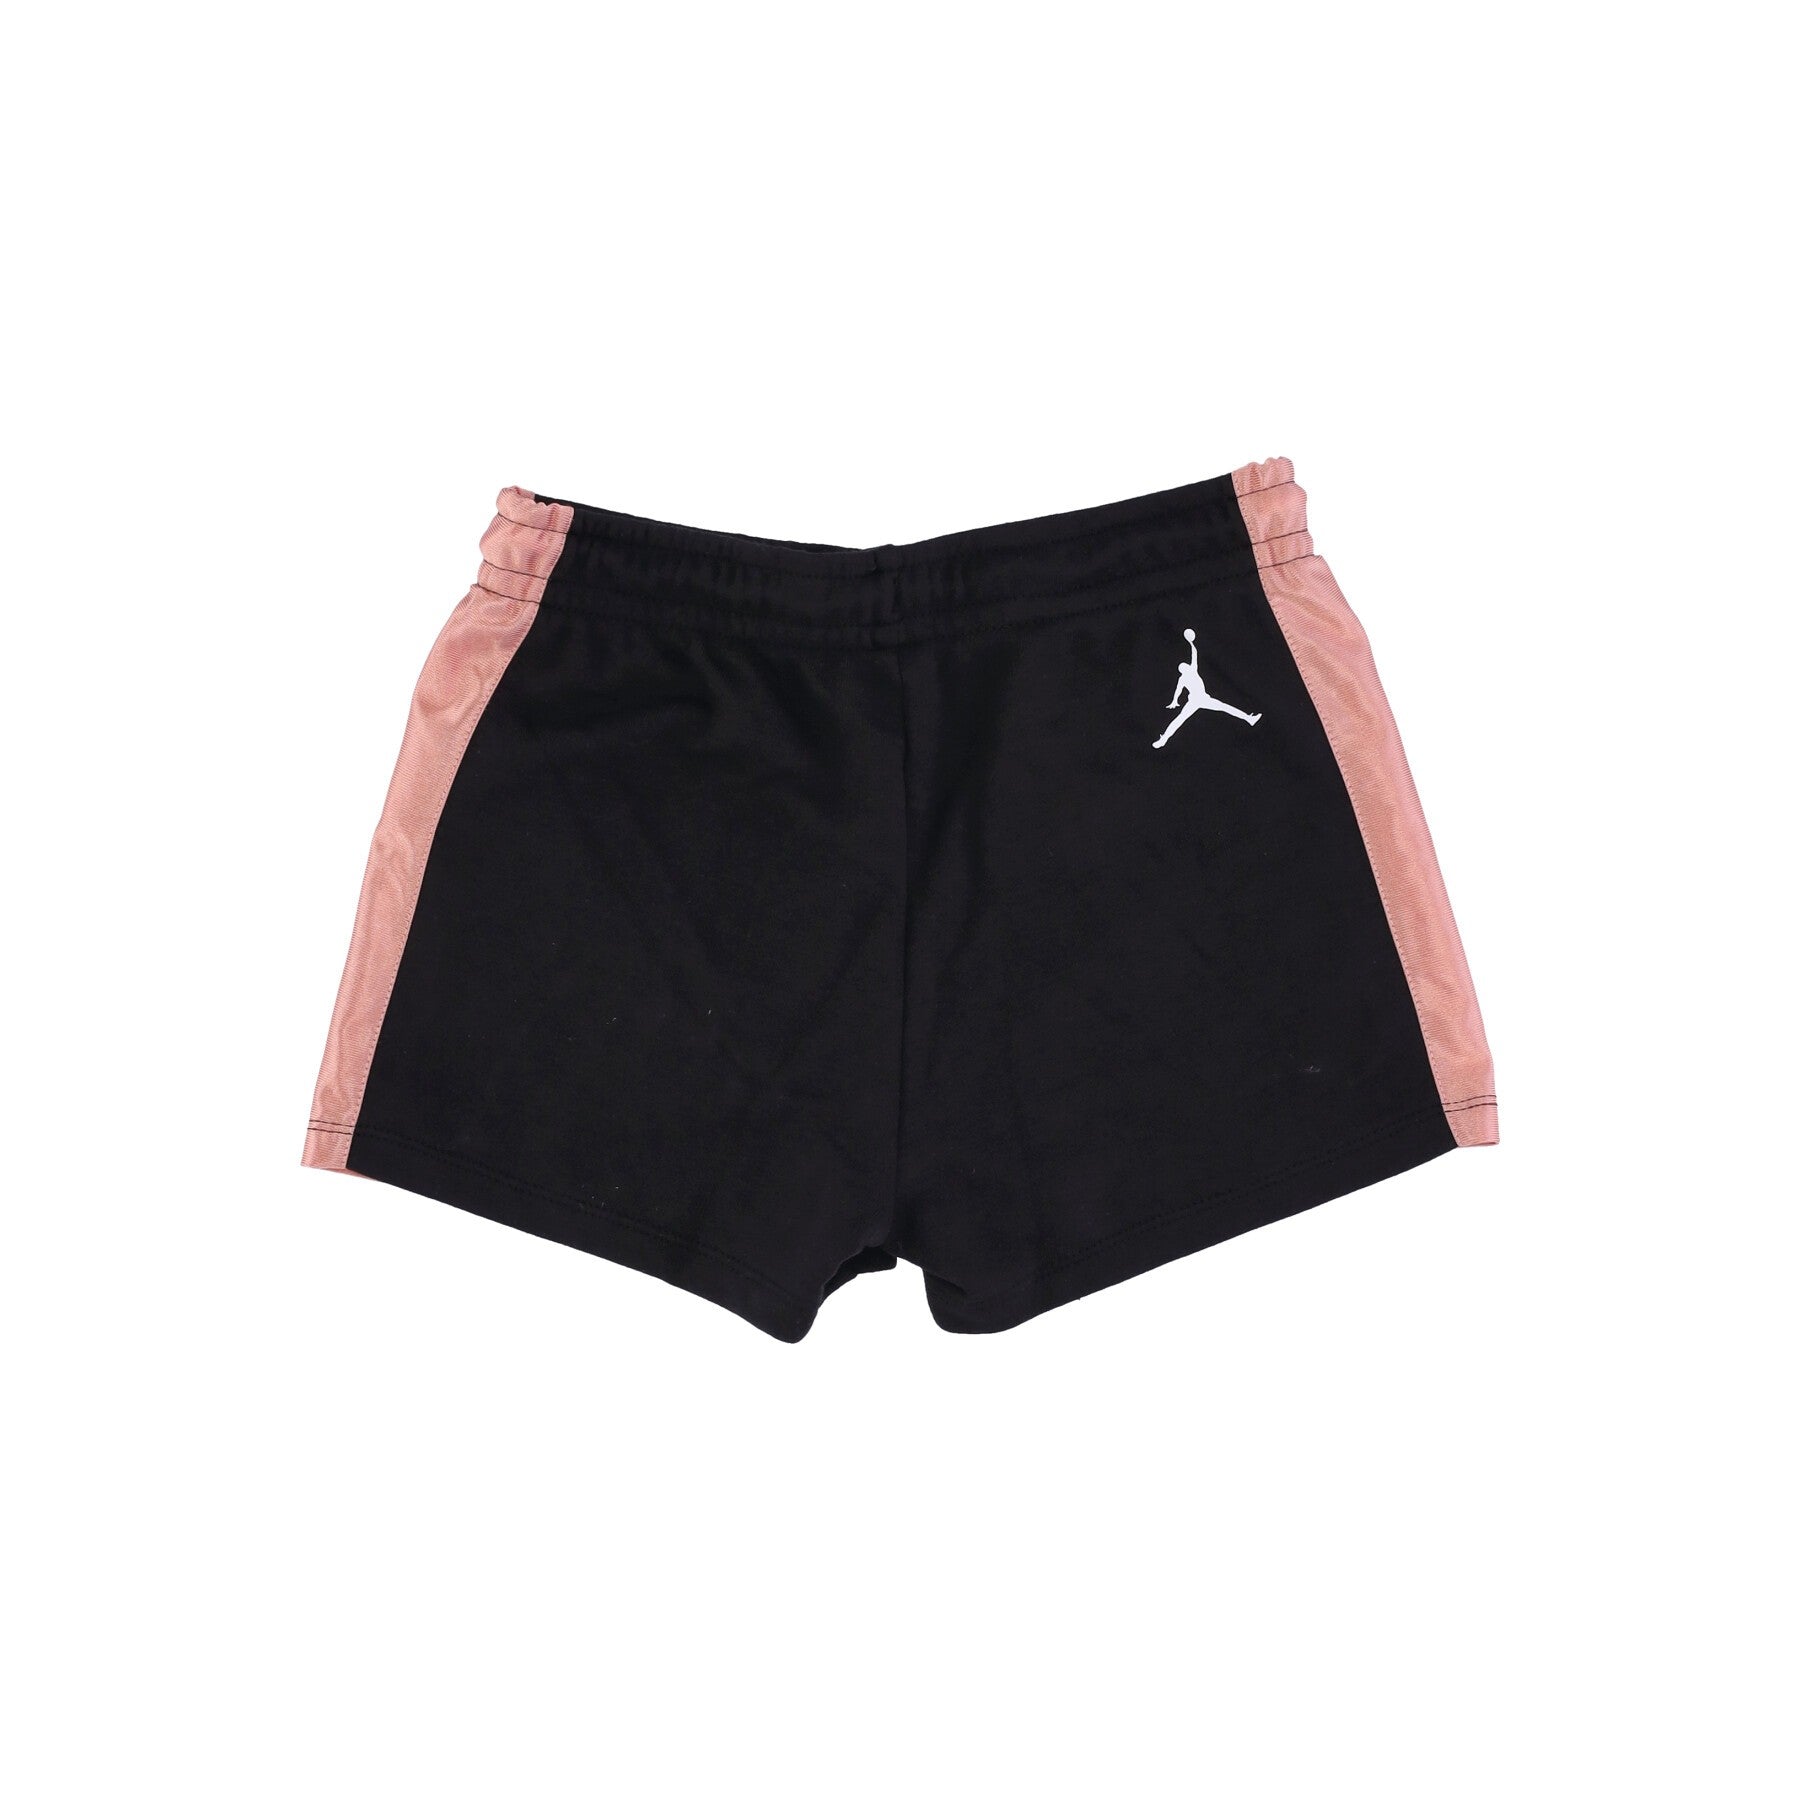 Jordan, Pantaloncino Ragazza Pink Satin Ft Shorts, 